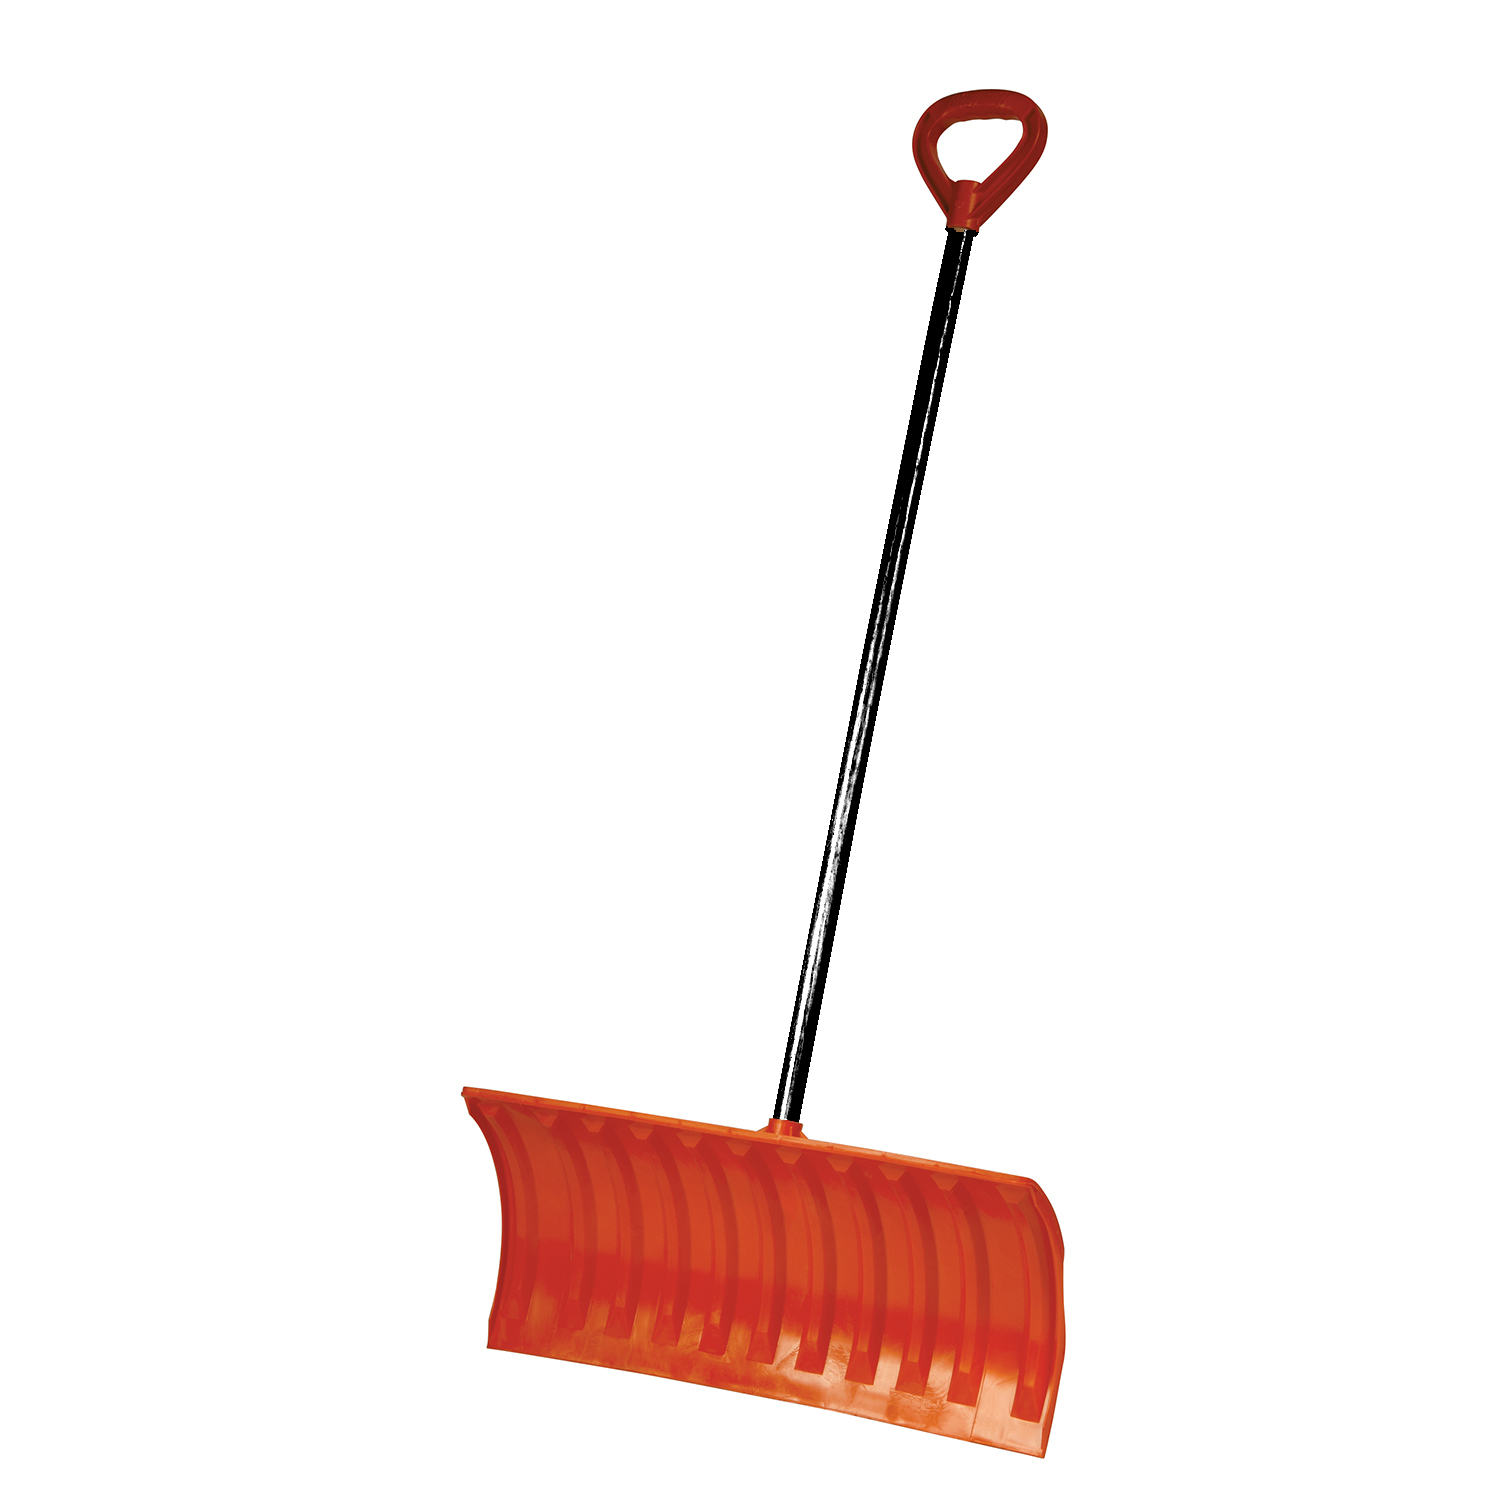 U type Black Plastic Snow Shovel Replacement D Grip Spade Top Handle Garden OQF